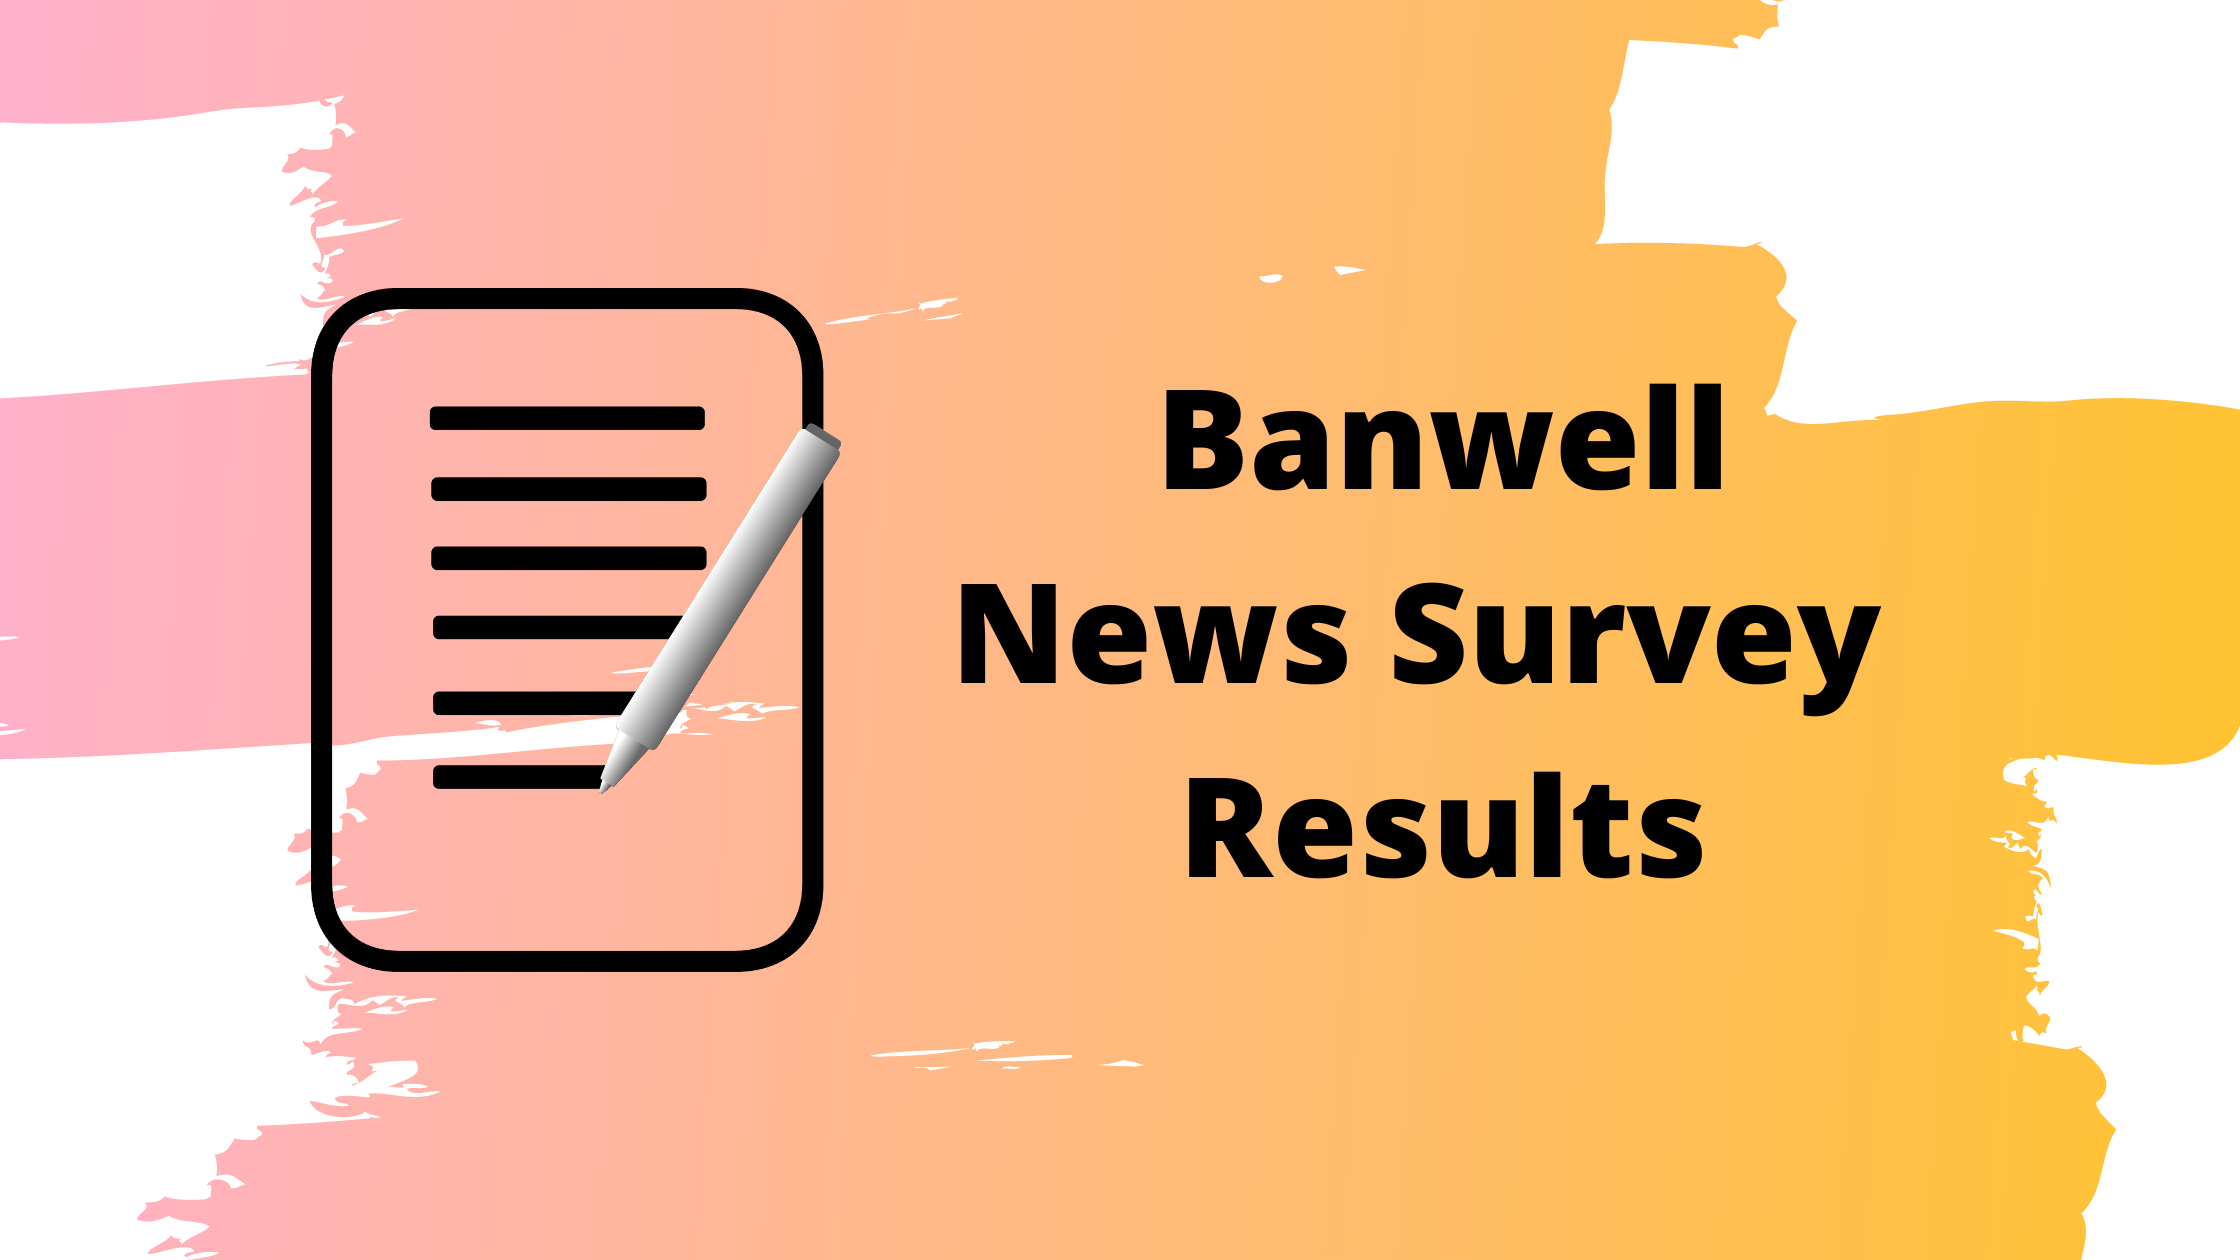 News survey results image